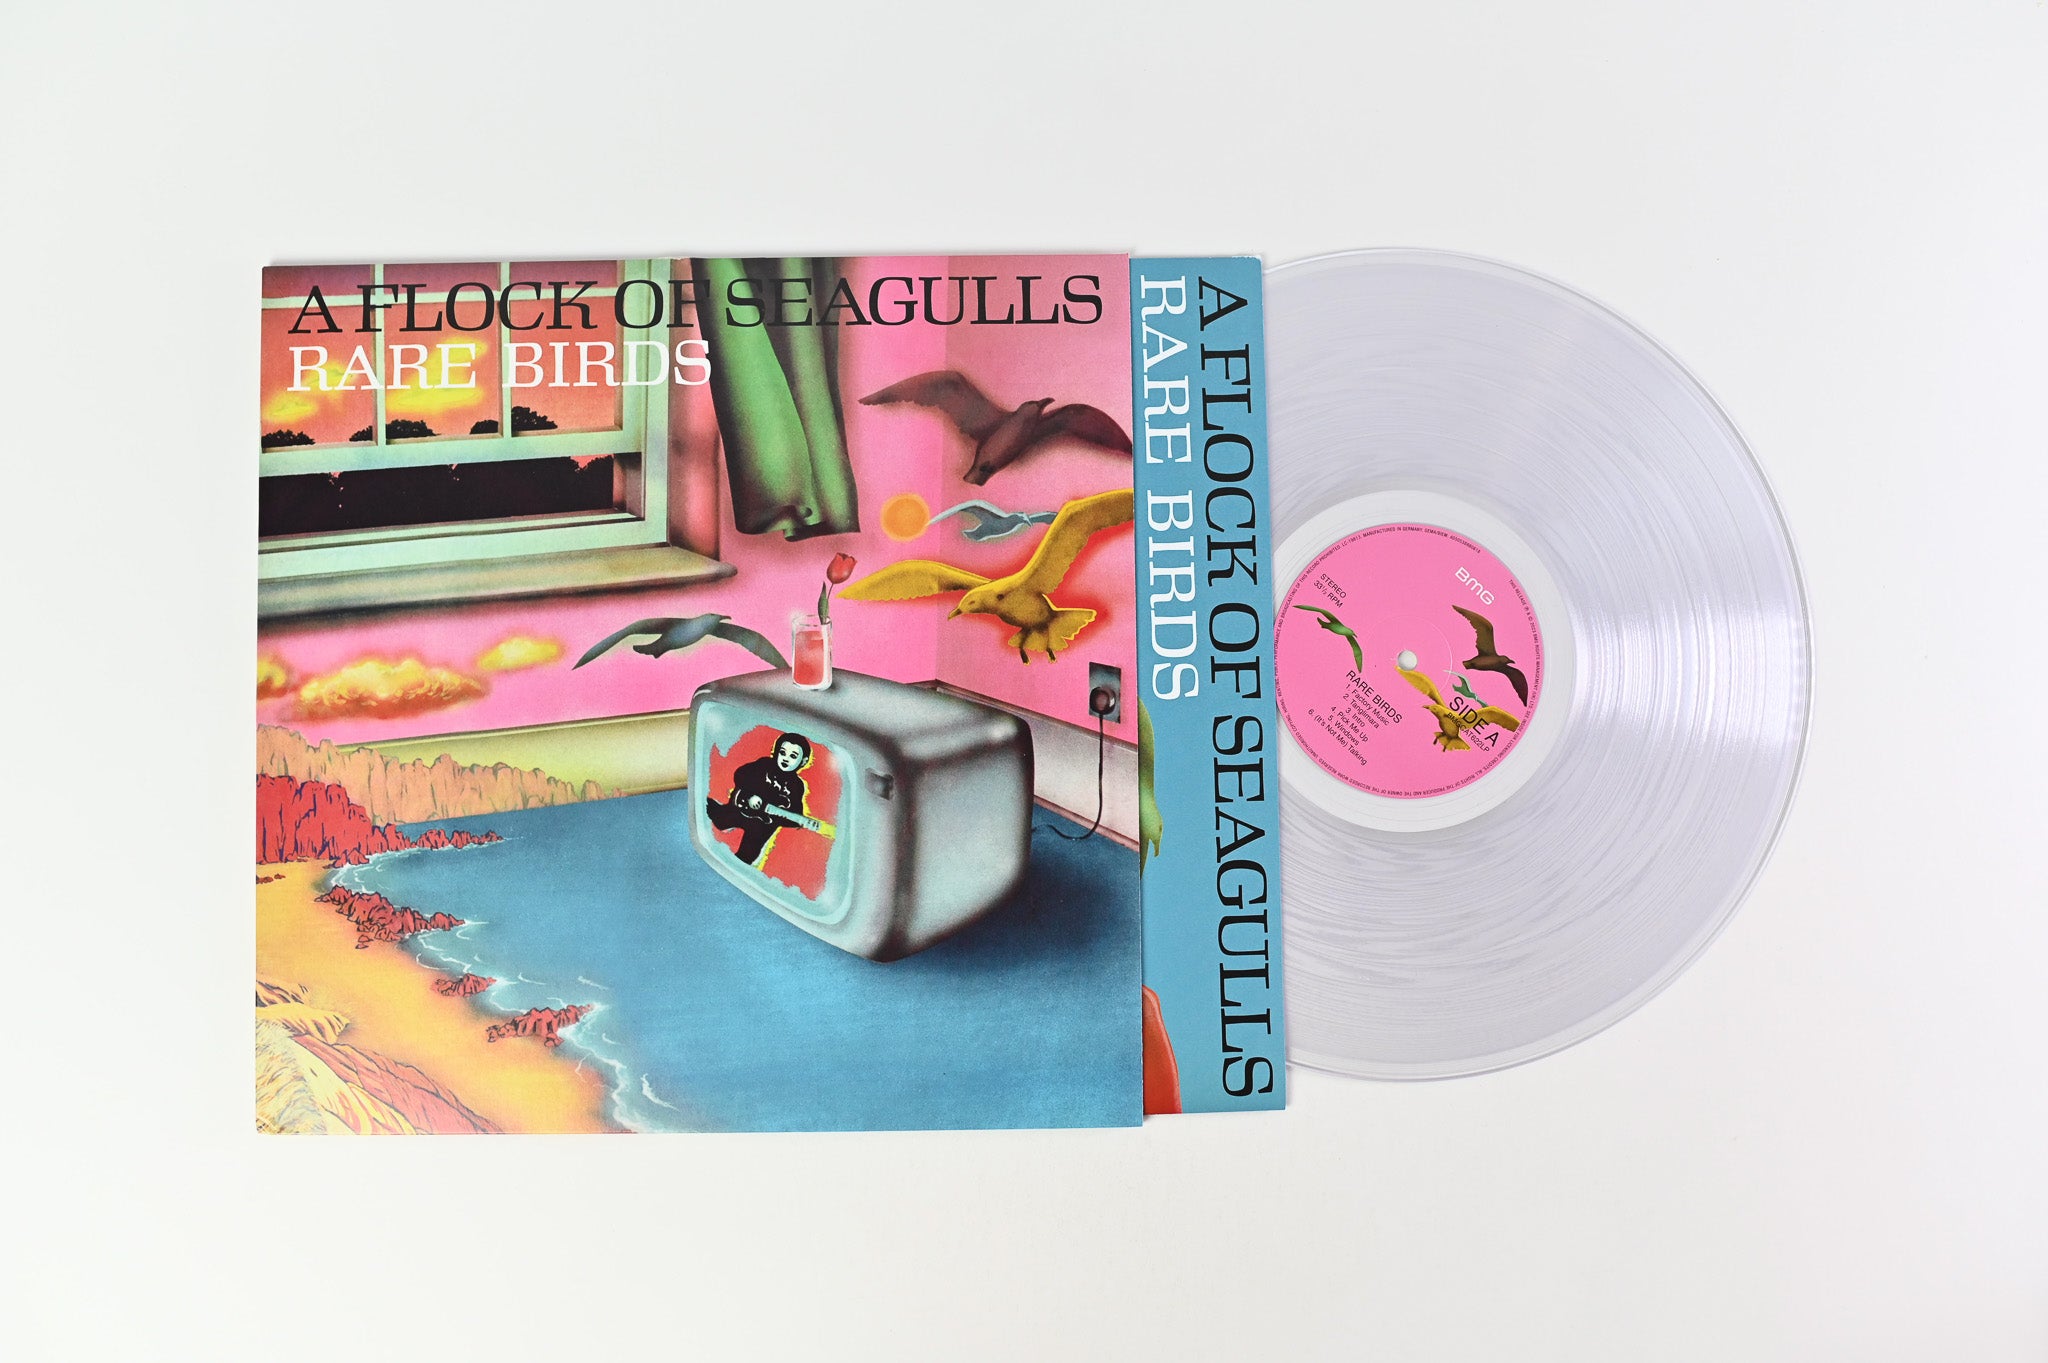 A Flock Of Seagulls - Rare Birds (B-Sides, Edits & Alternate Mixes) on BMG RSD Ltd Transparent Vinyl